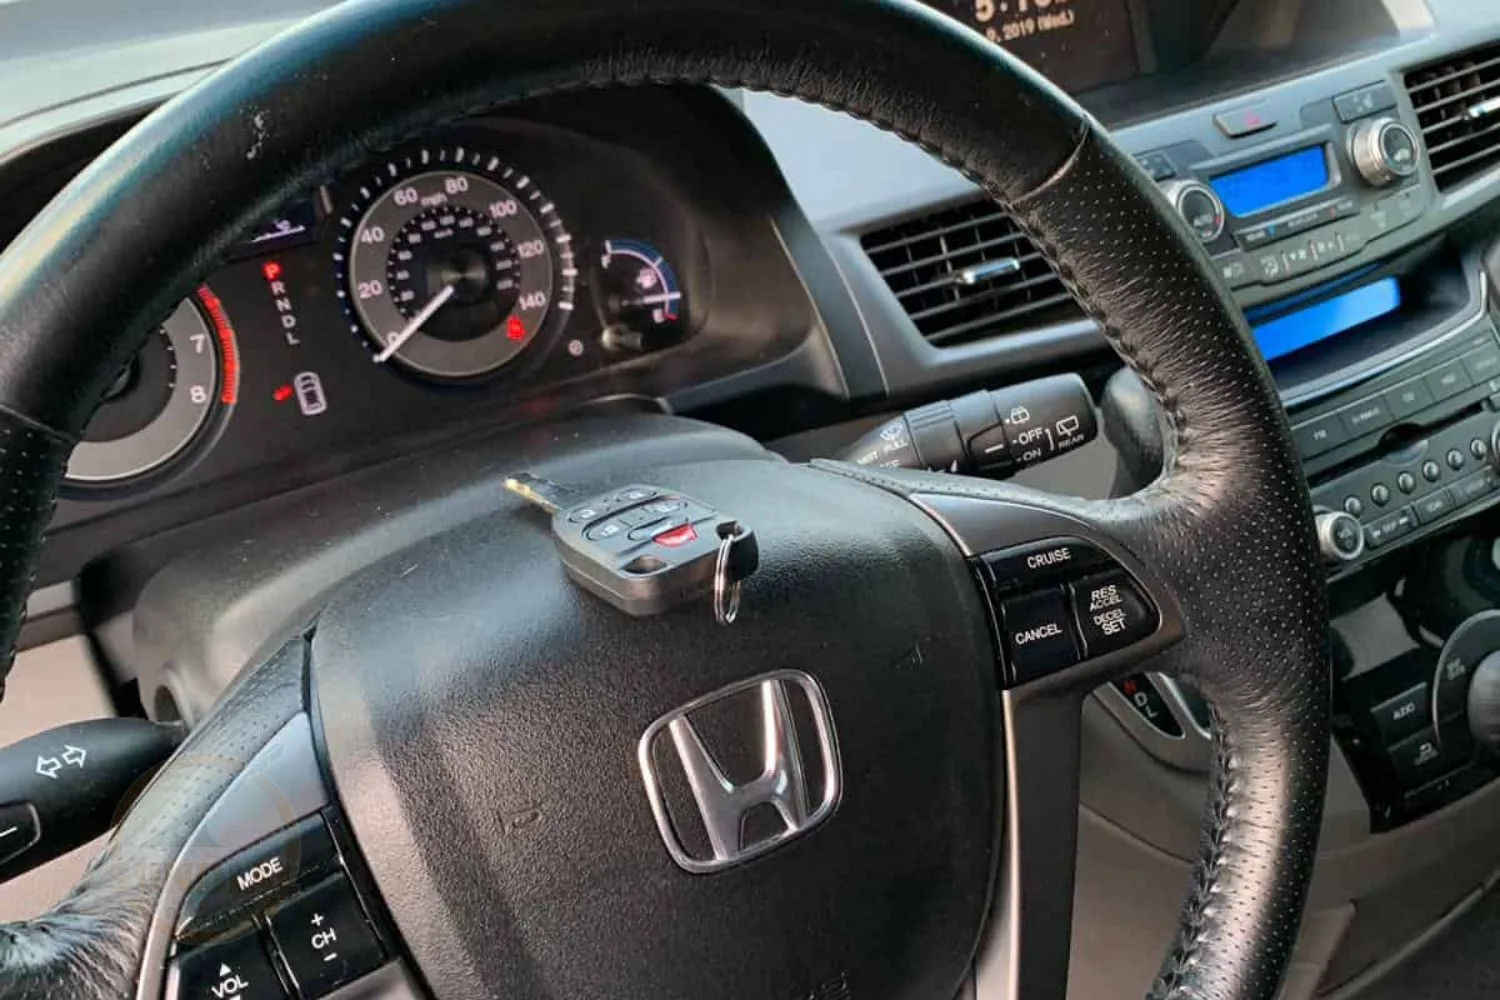 Car interior with Honda steering wheel and key fob.